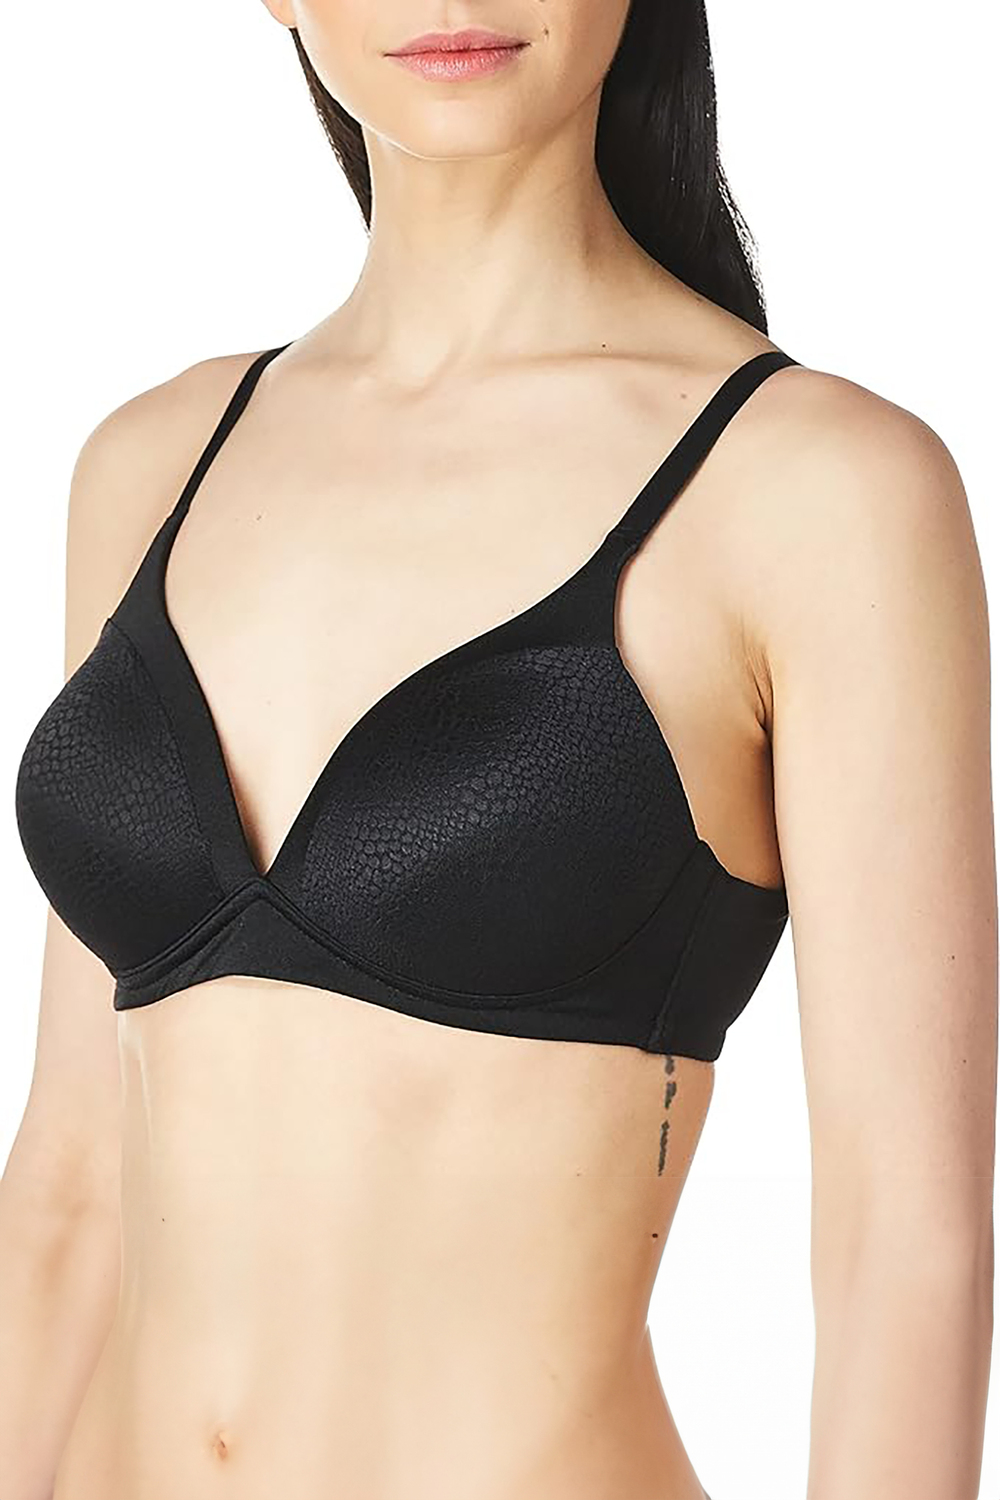 Warners - Blissful Benefits ultrasoft wire-free bra. Colour: black. Size:  36c